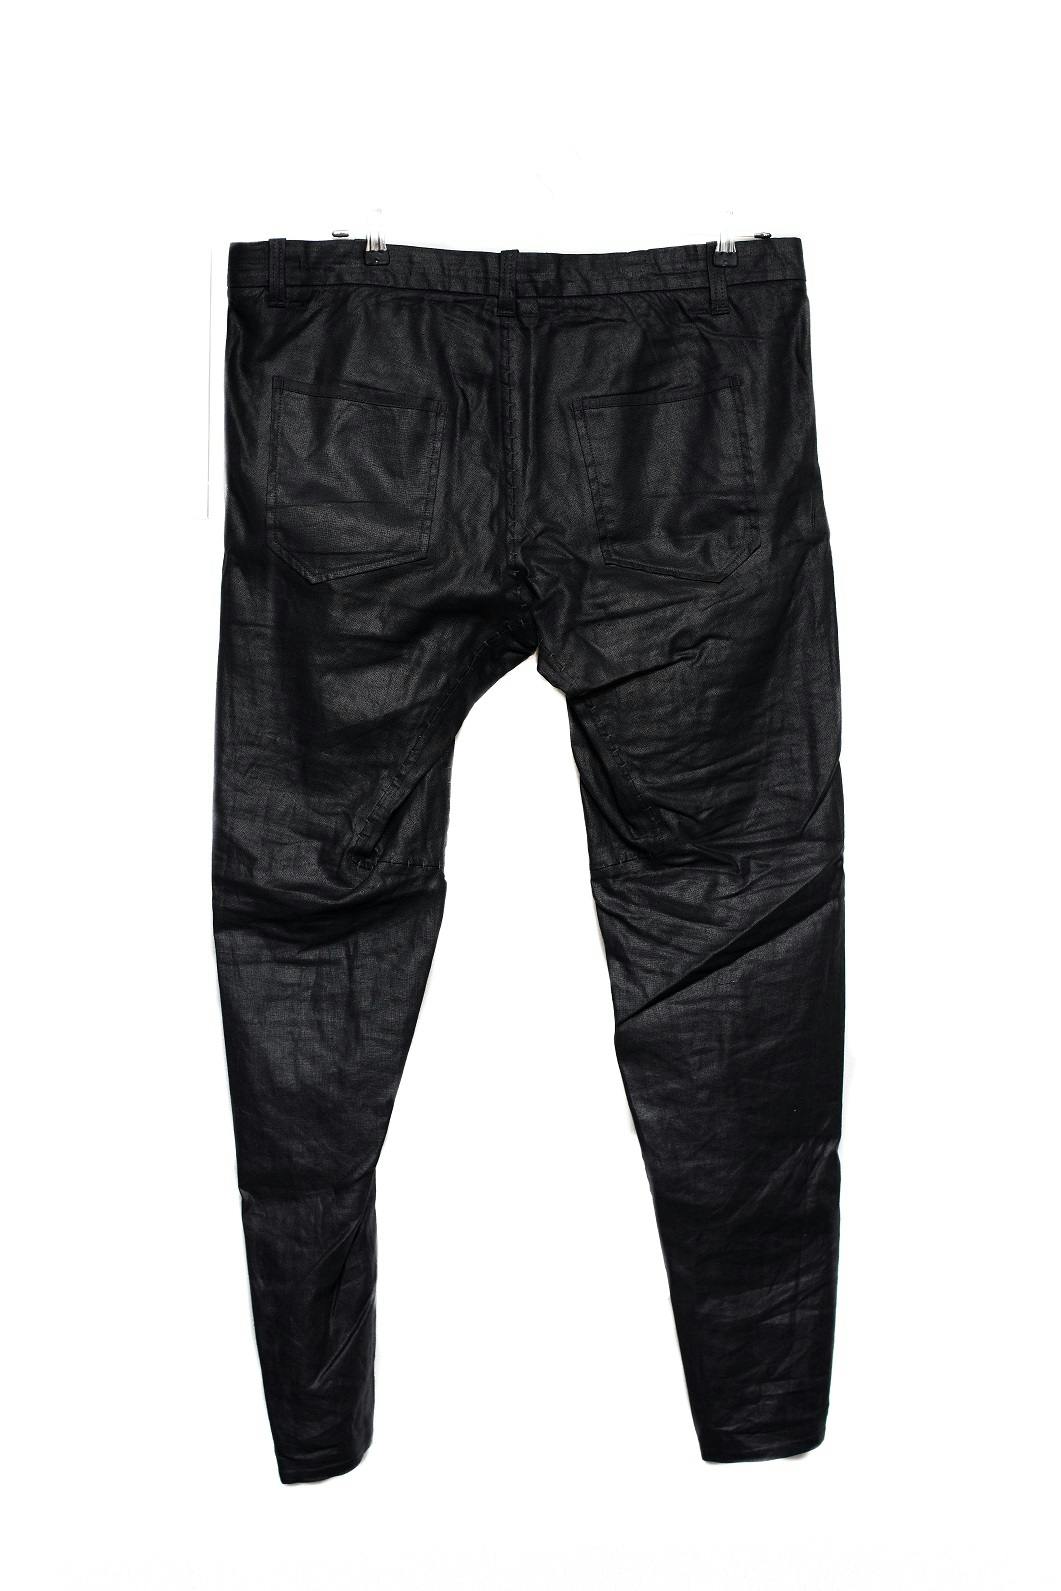 Isaac Sellam Experience Black Garmet Dyed Pants Size 38 - 2